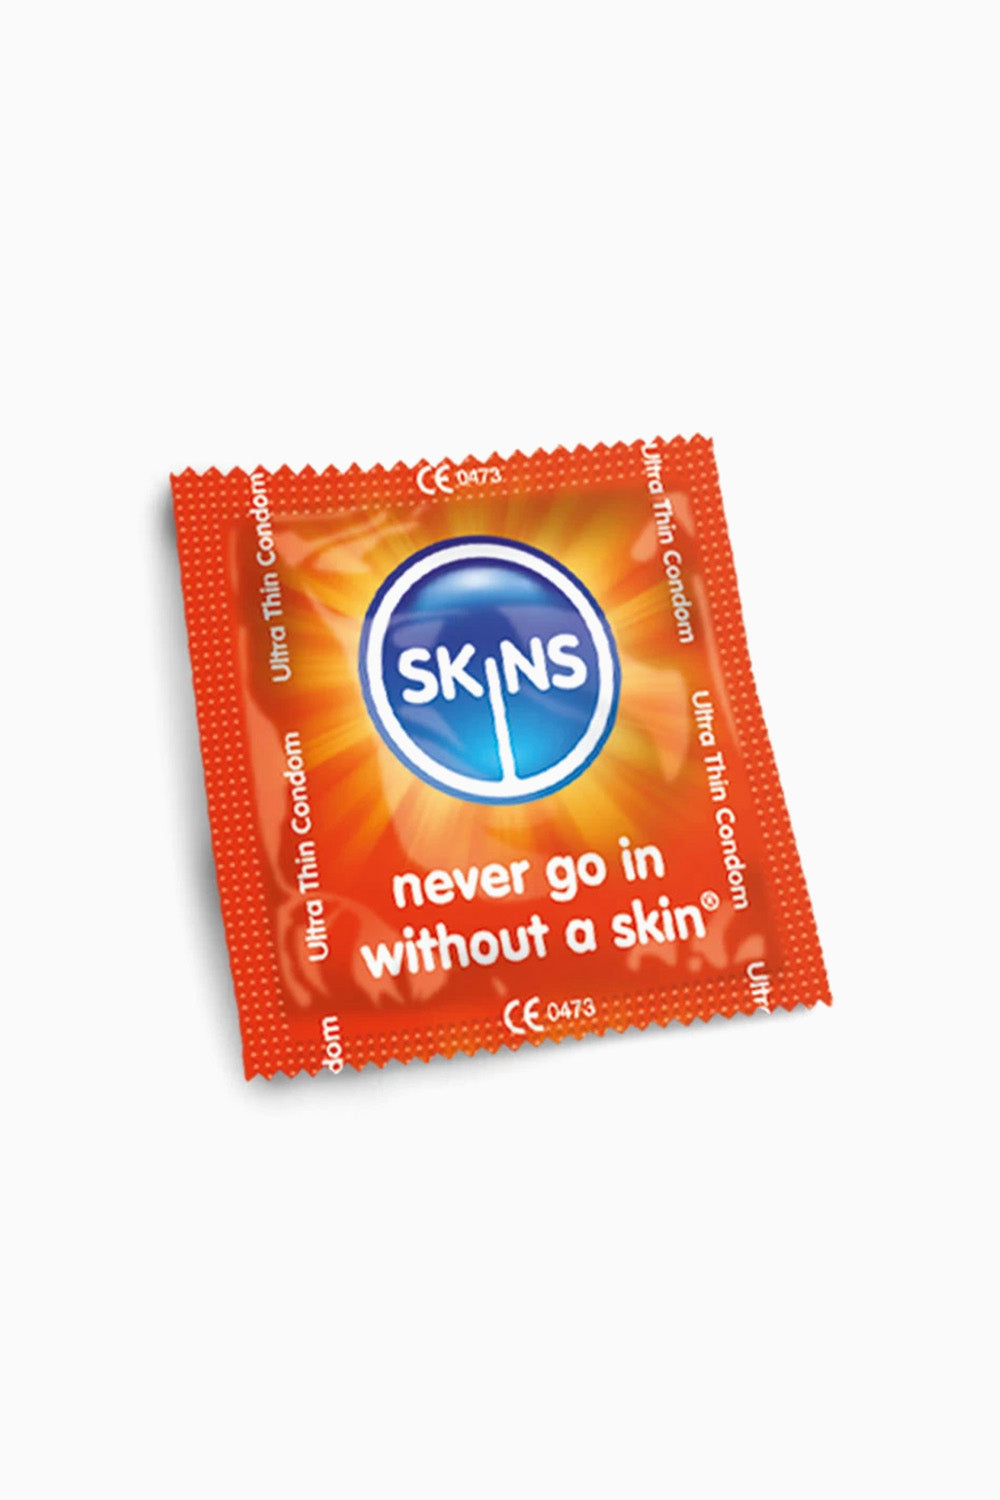 Skins Condoms Strawberry